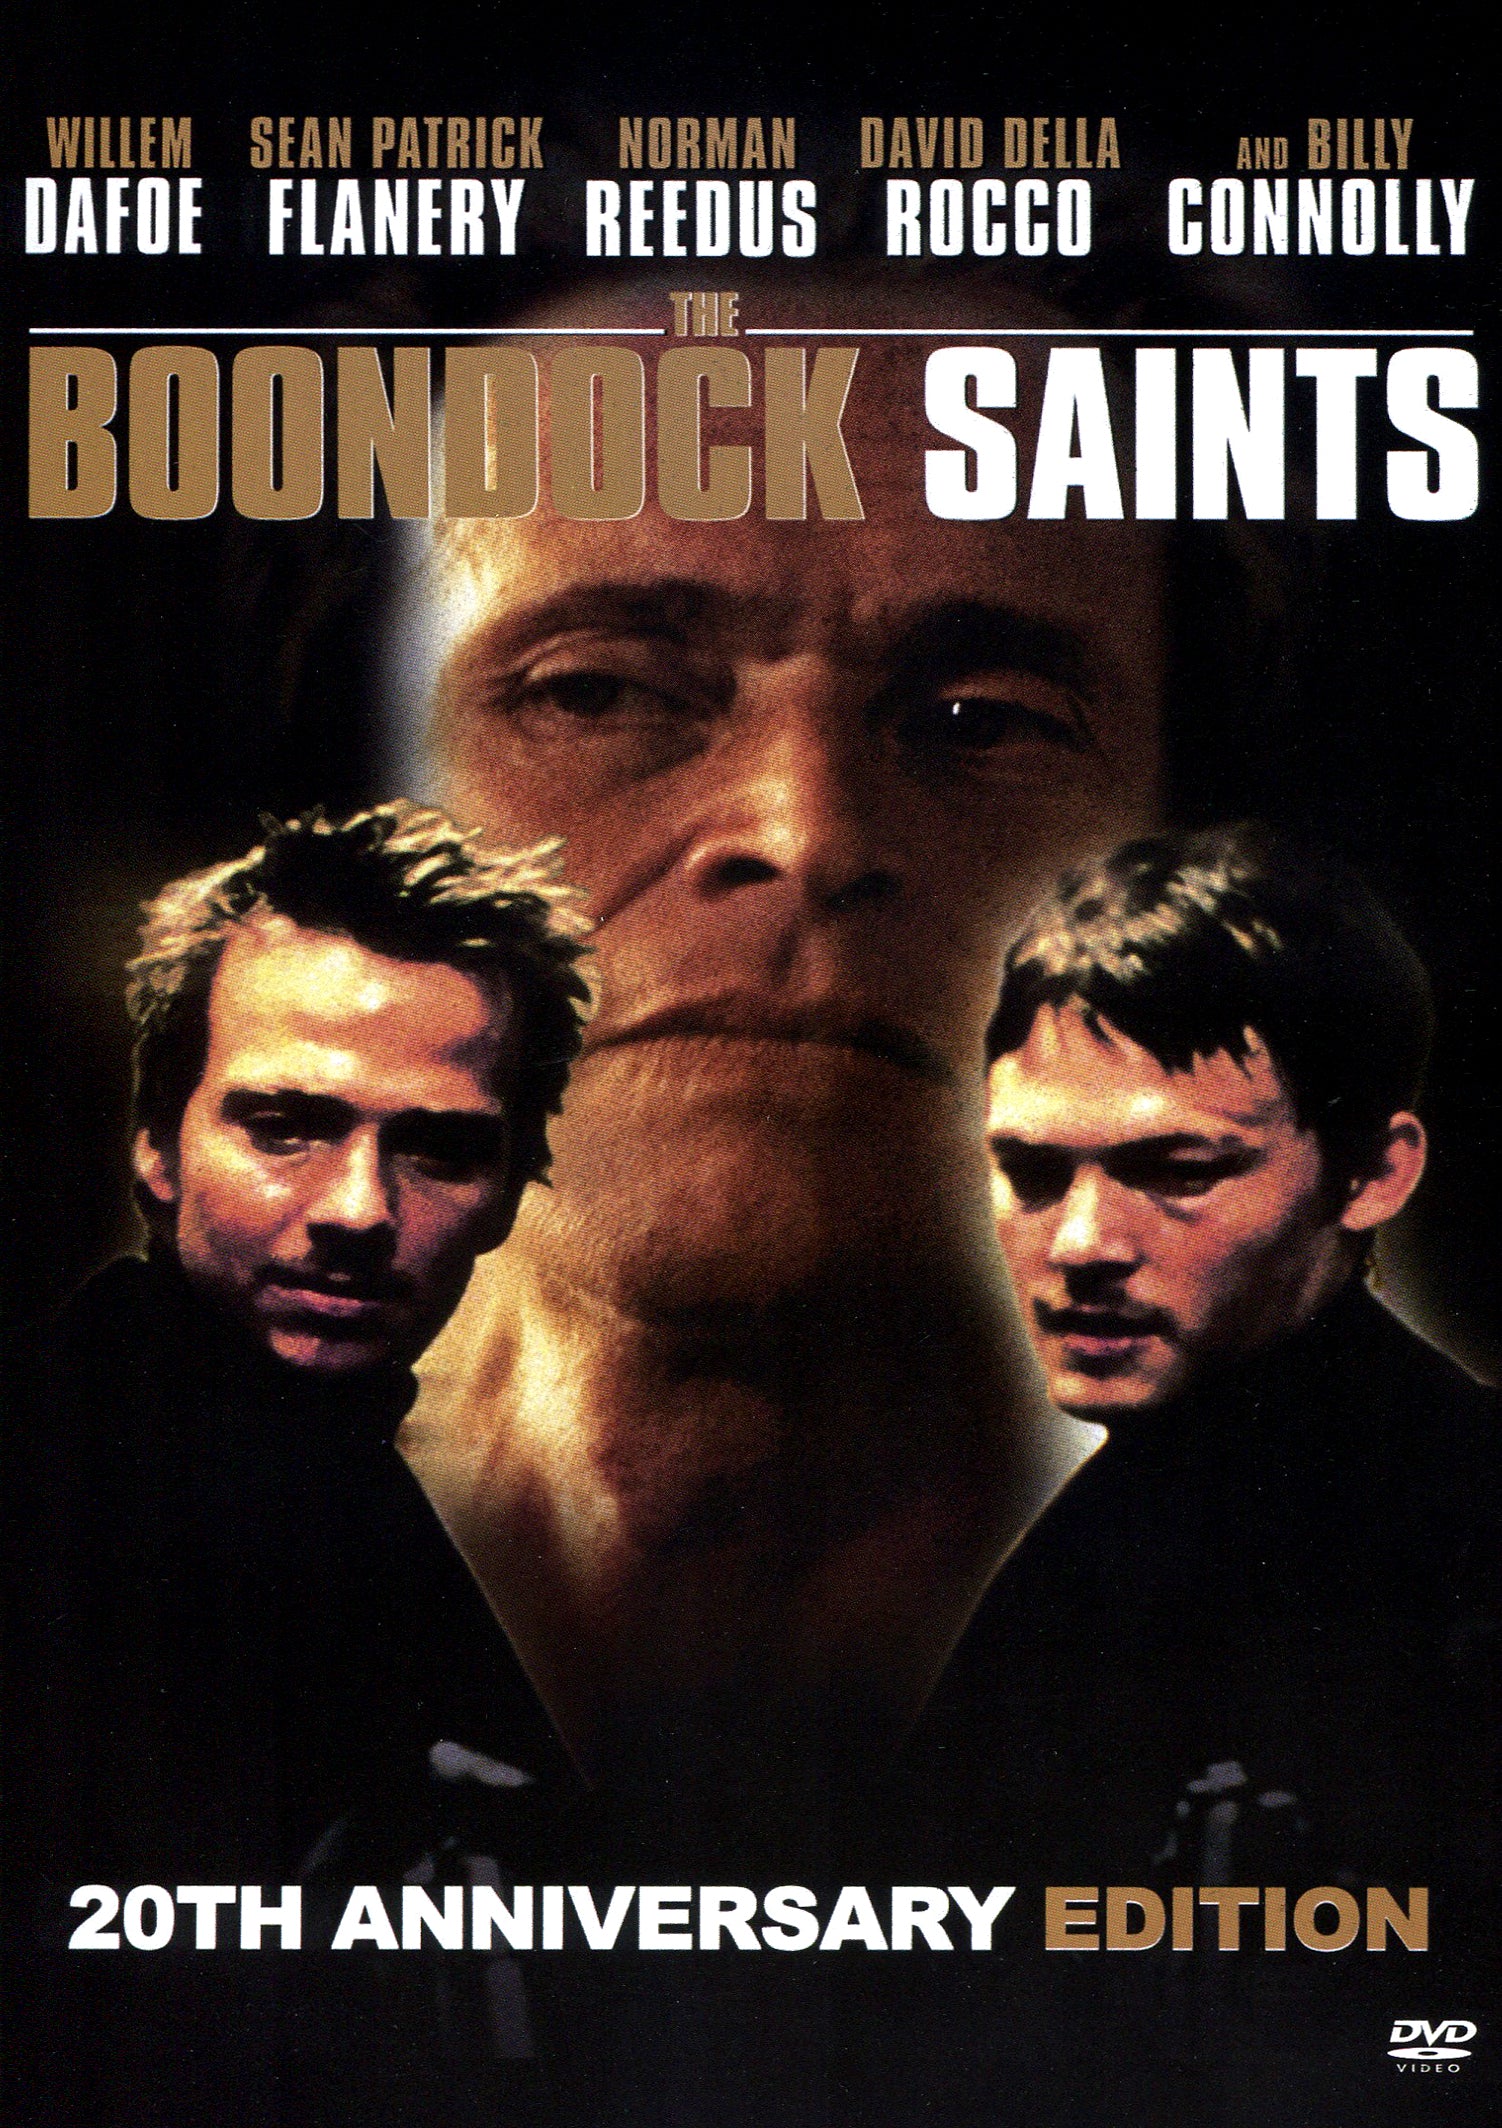 Boondock Saints cover art